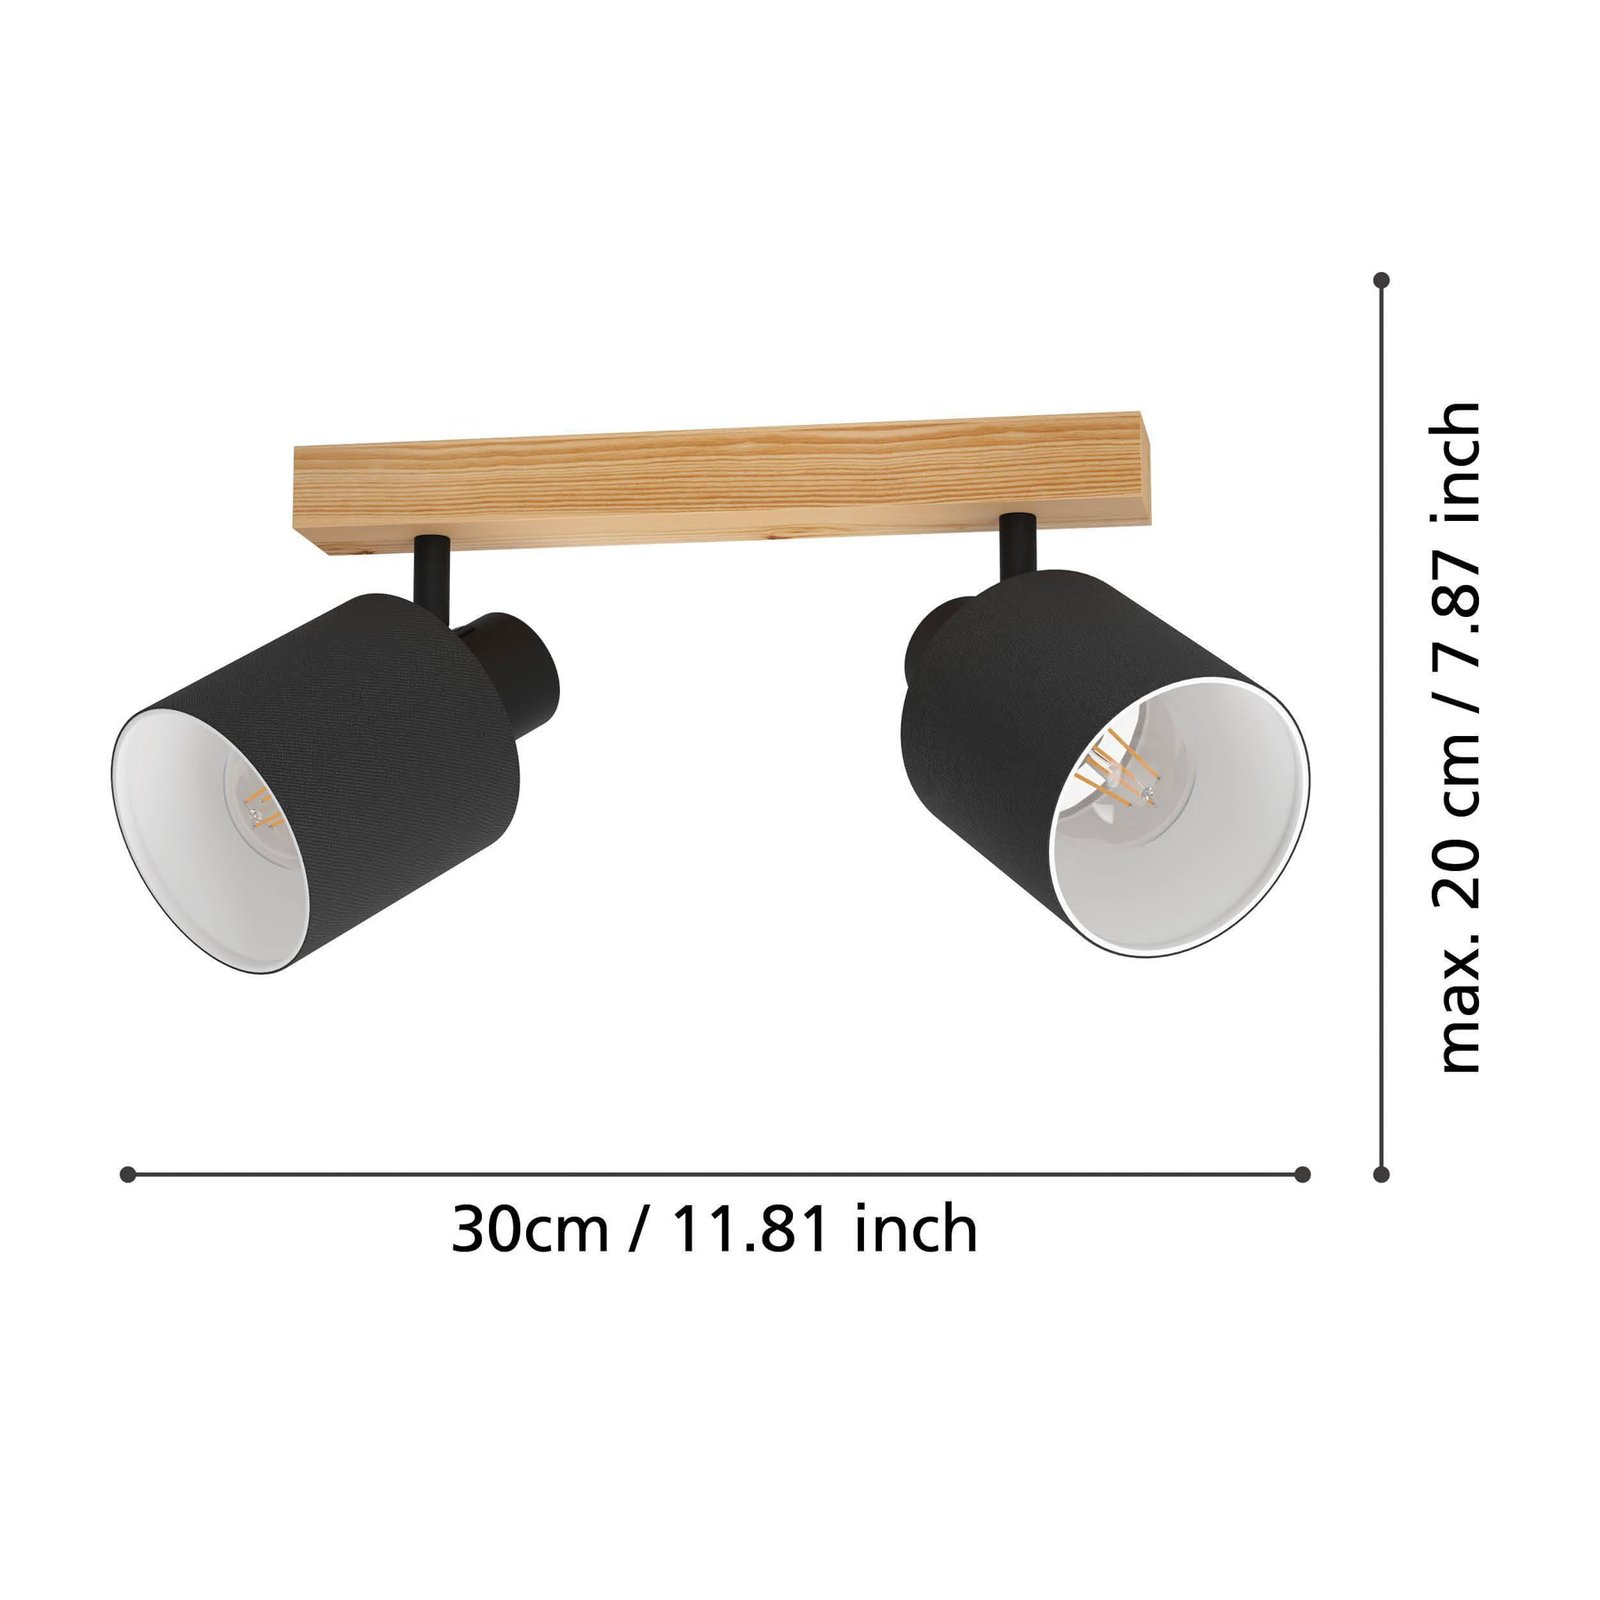 Batallas downlight, length 30 cm, black/wood, 2-bulb.